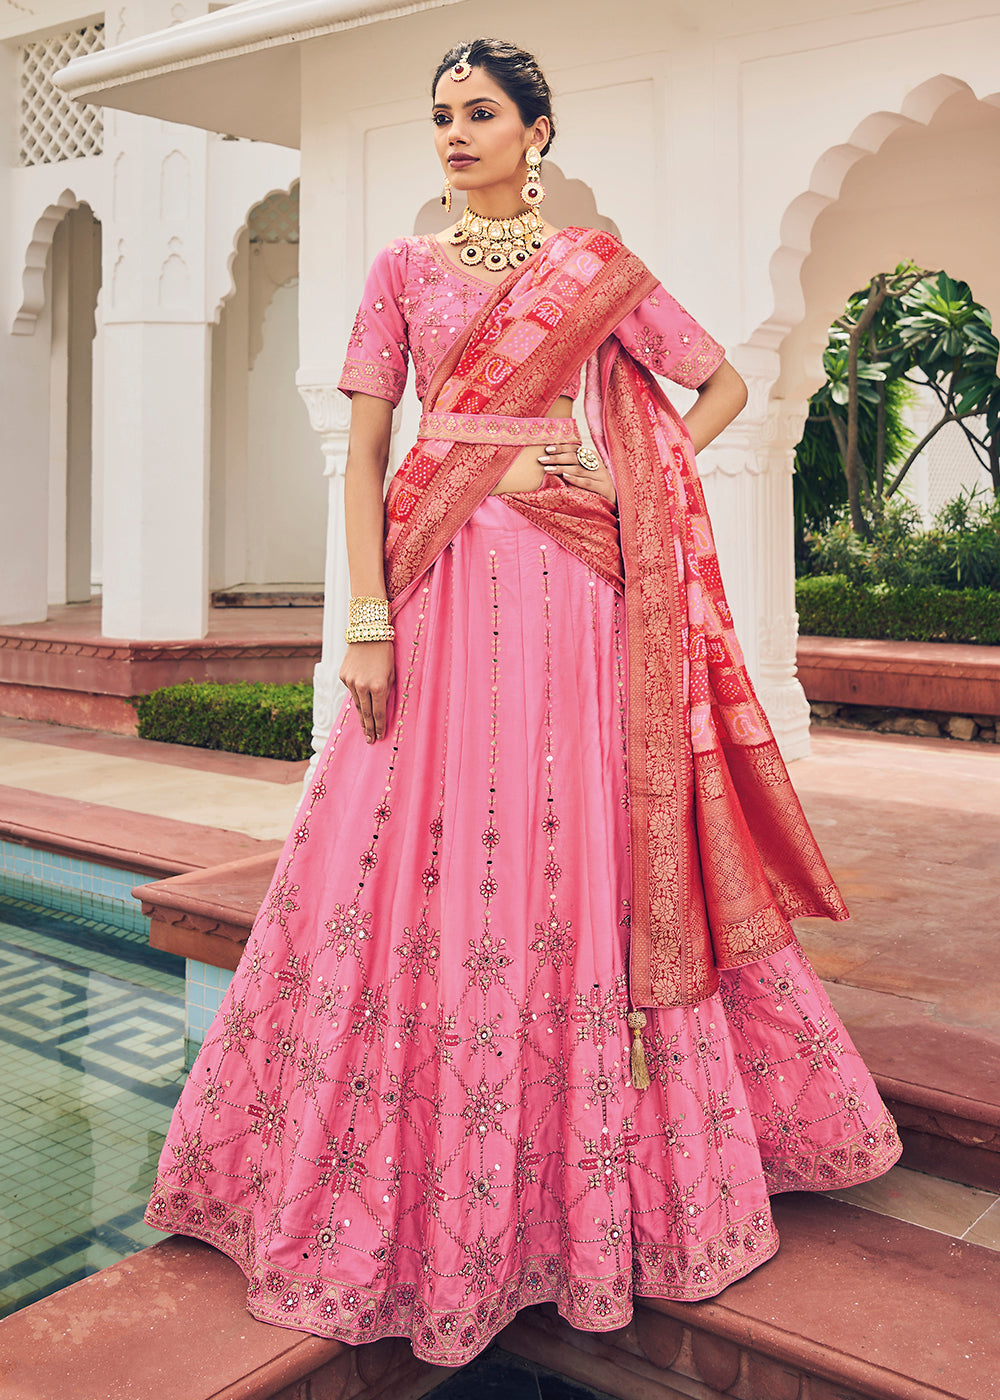 Buy Now Gorgeous Pink Viscose Silk Traditional Bridal Lehenga Choli Online in USA, UK, Canada & Worldwide at Empress Clothing. 